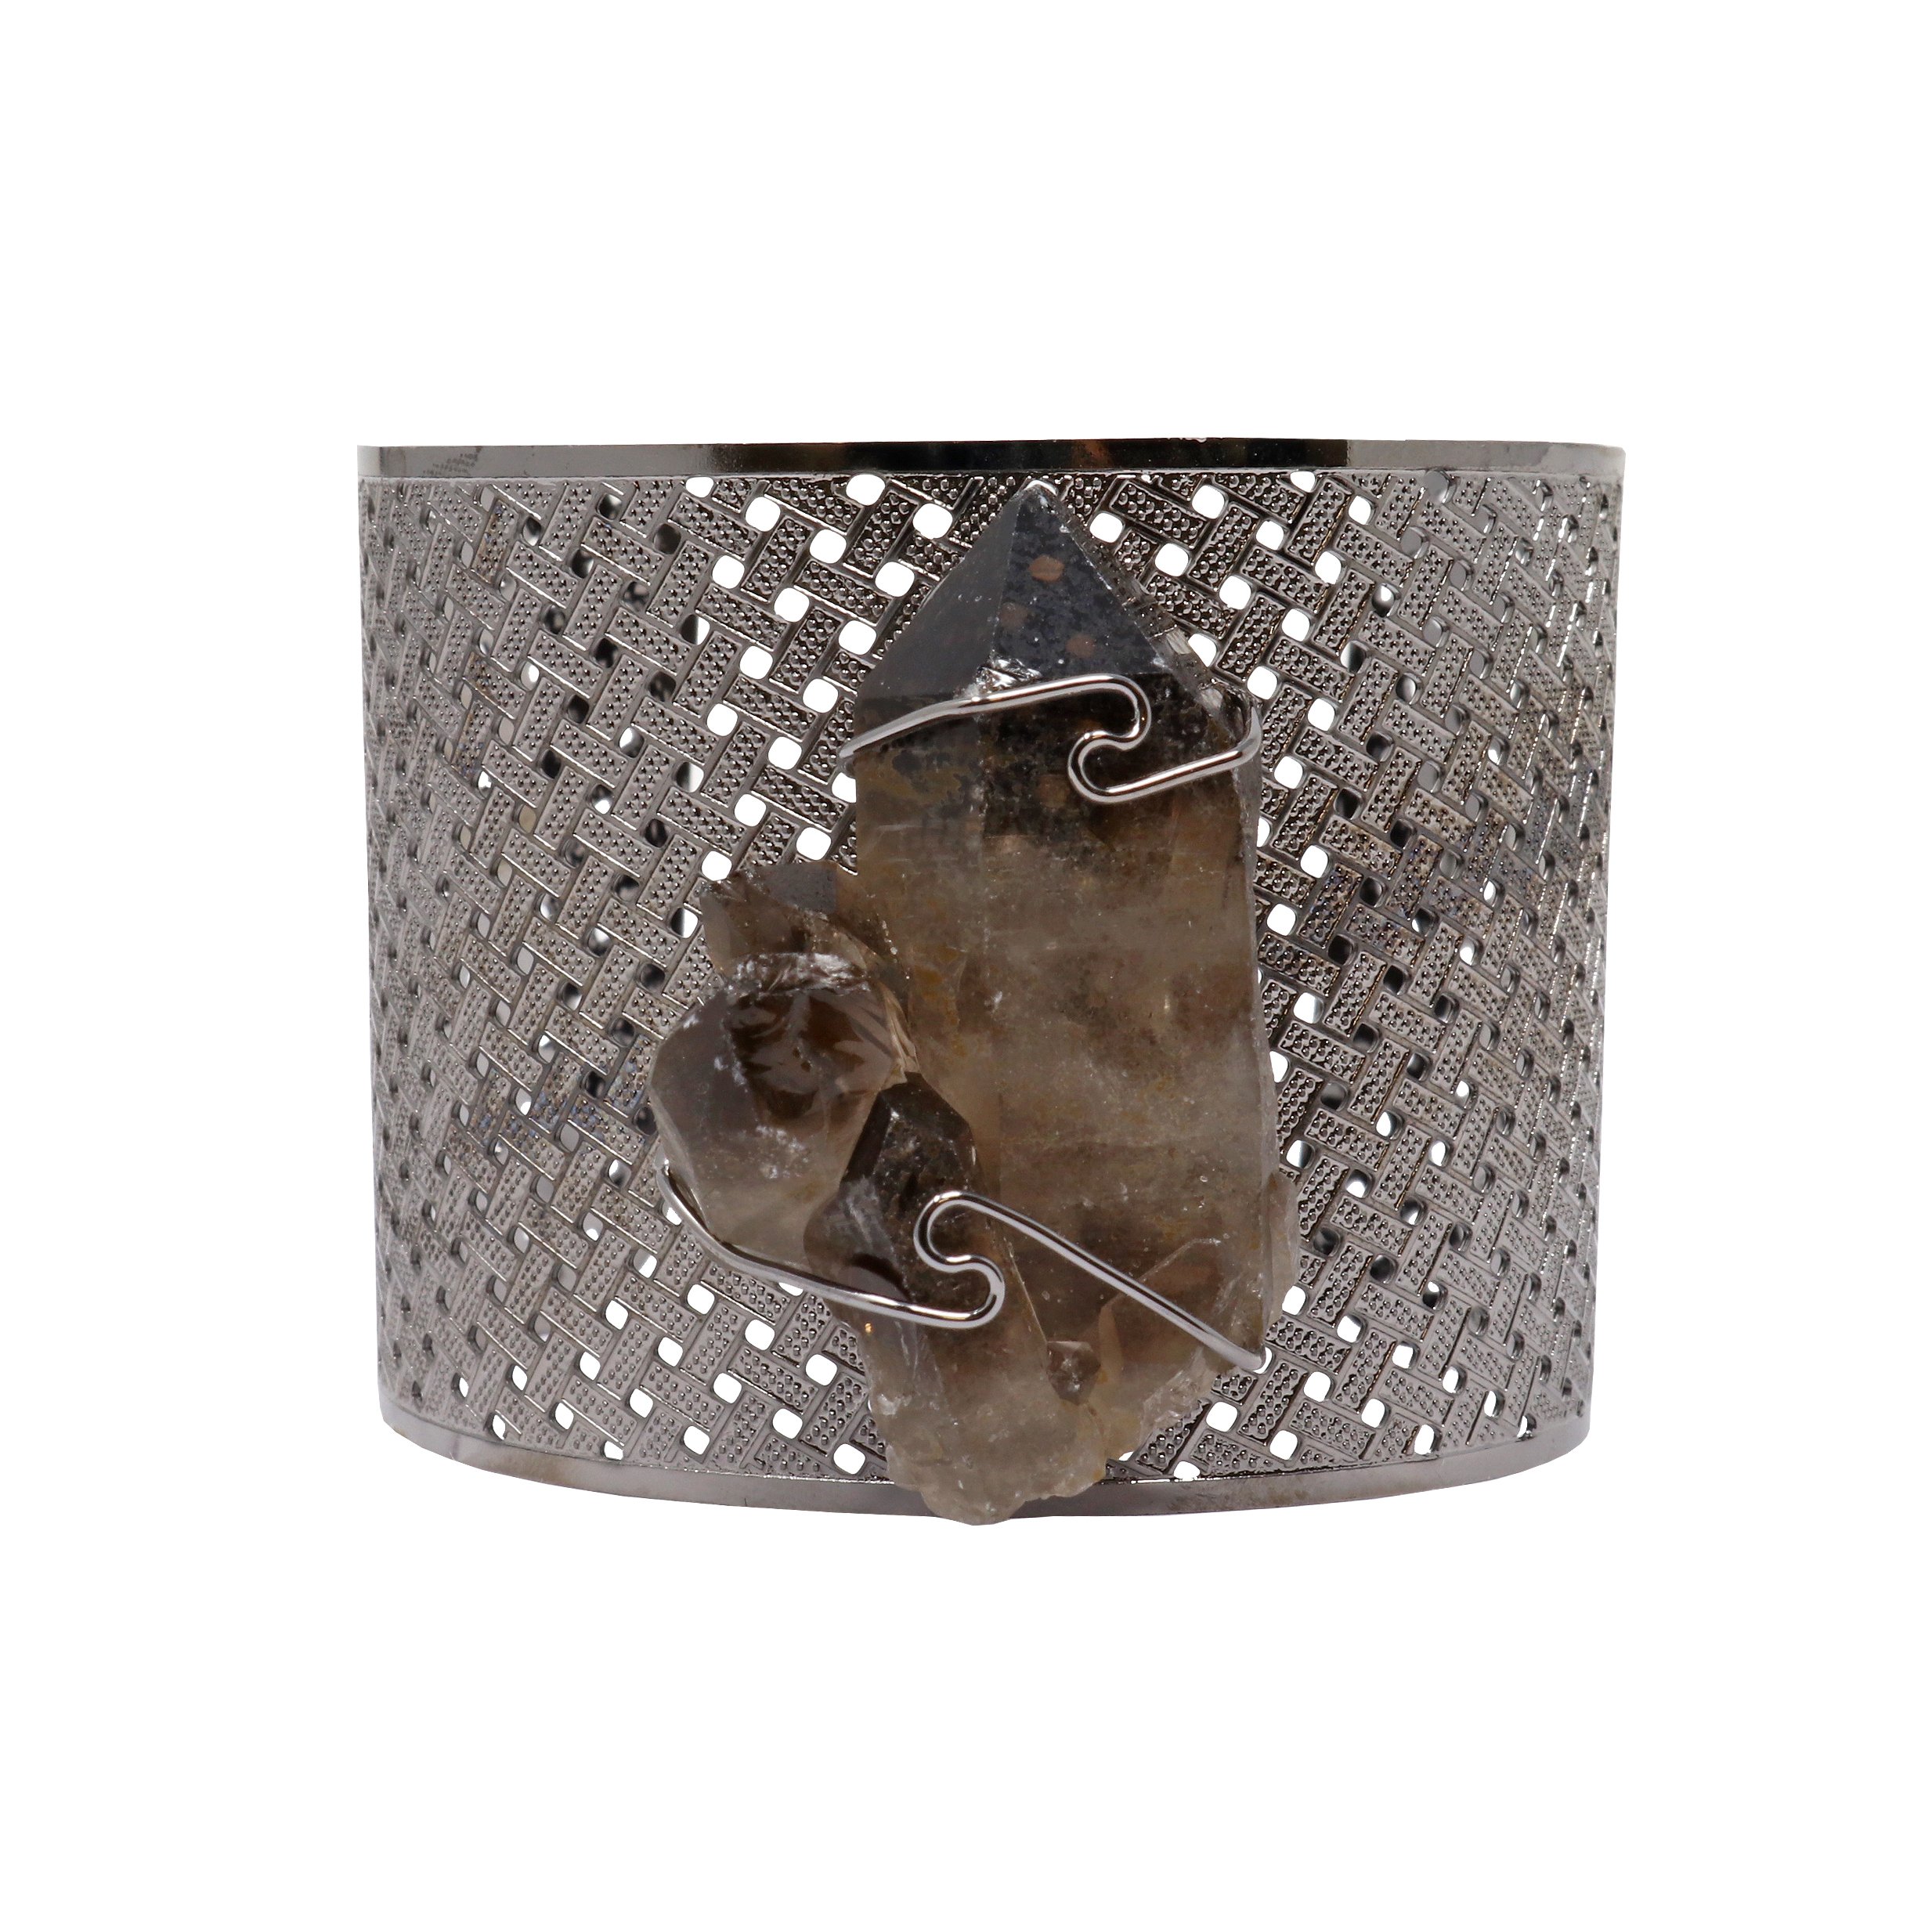 Smoky Quartz Cluster Cuff Bracelet - Prong Set Ruthenium Plated Wide Band